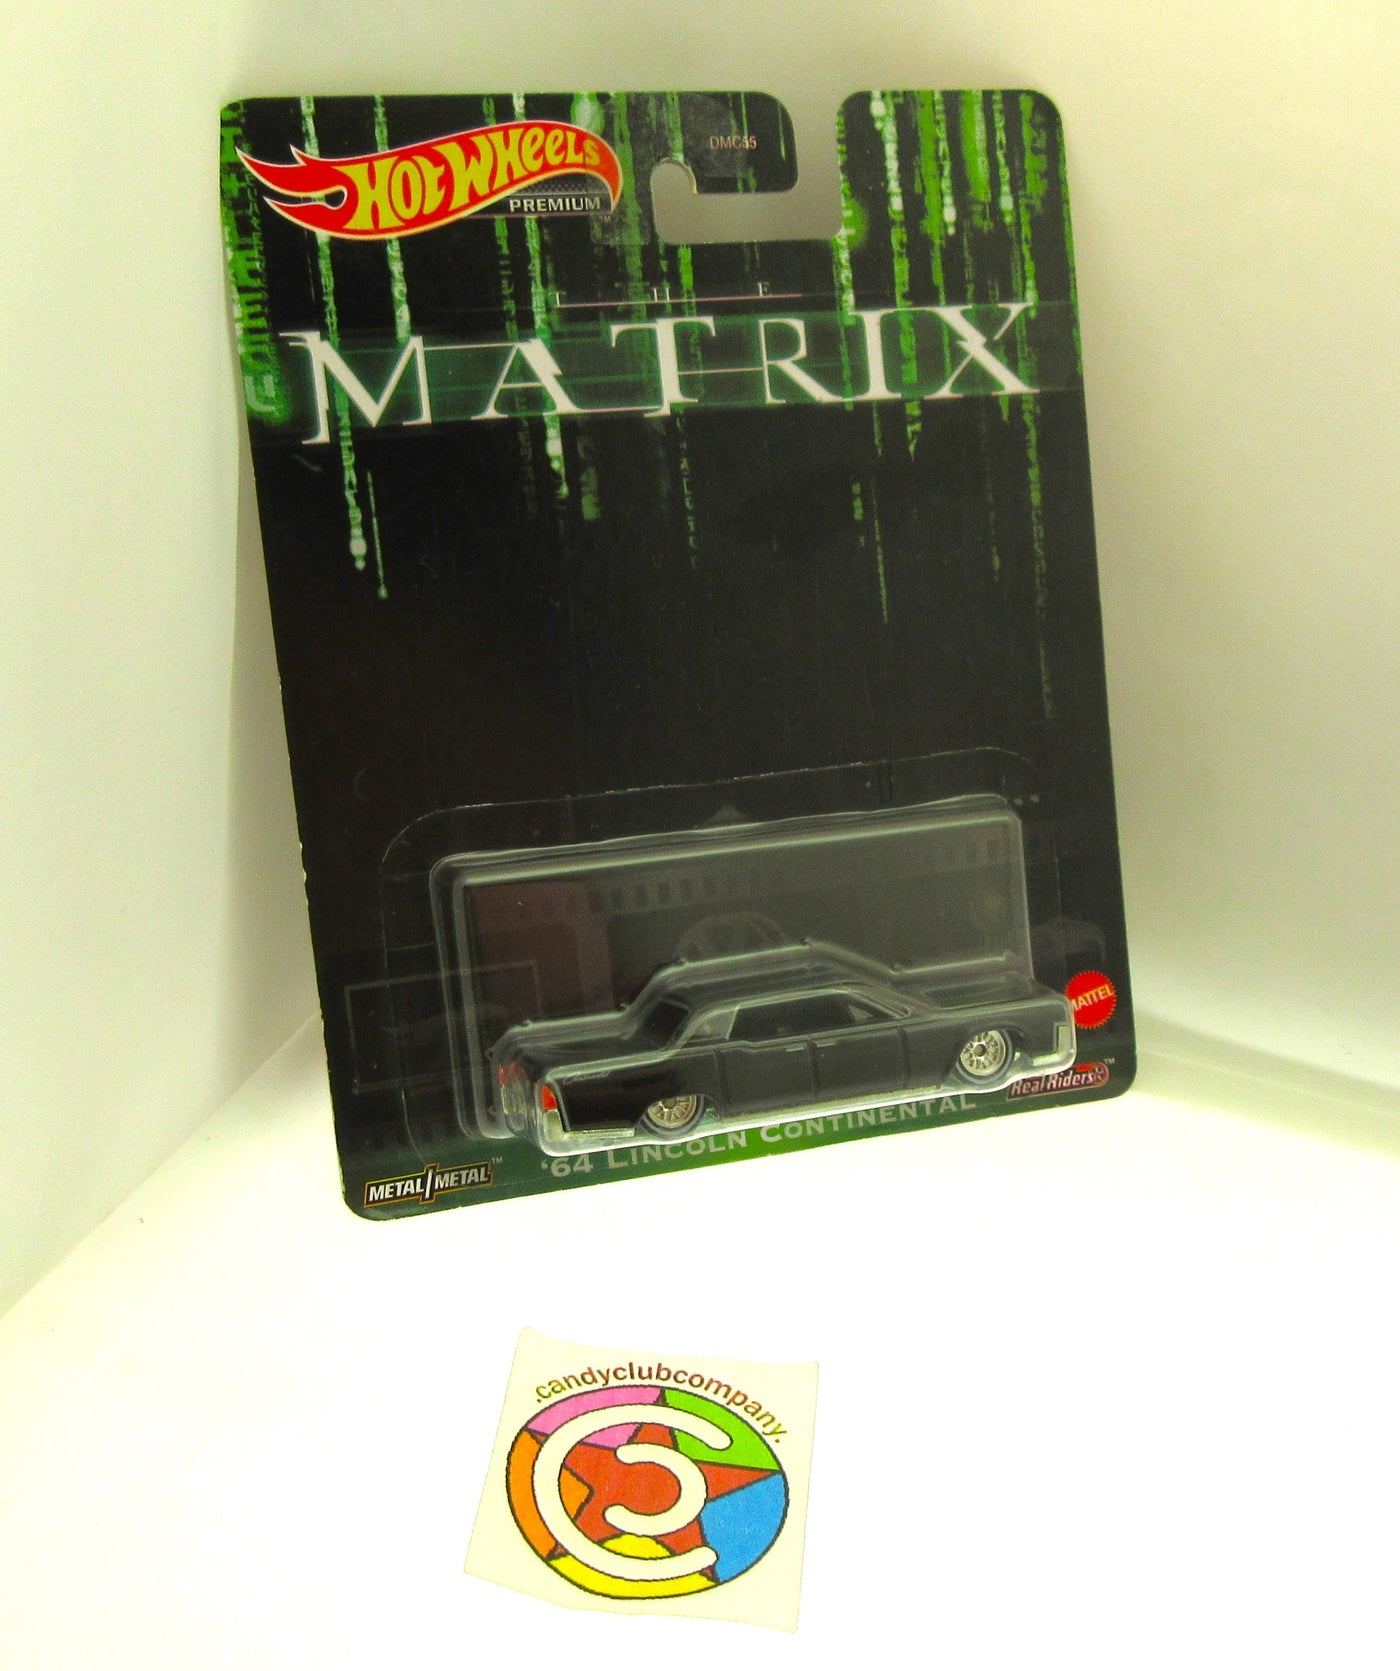 The Matrix 64' Lincoln Continental Hot Wheels Premium ~ 1:64 Die Cast